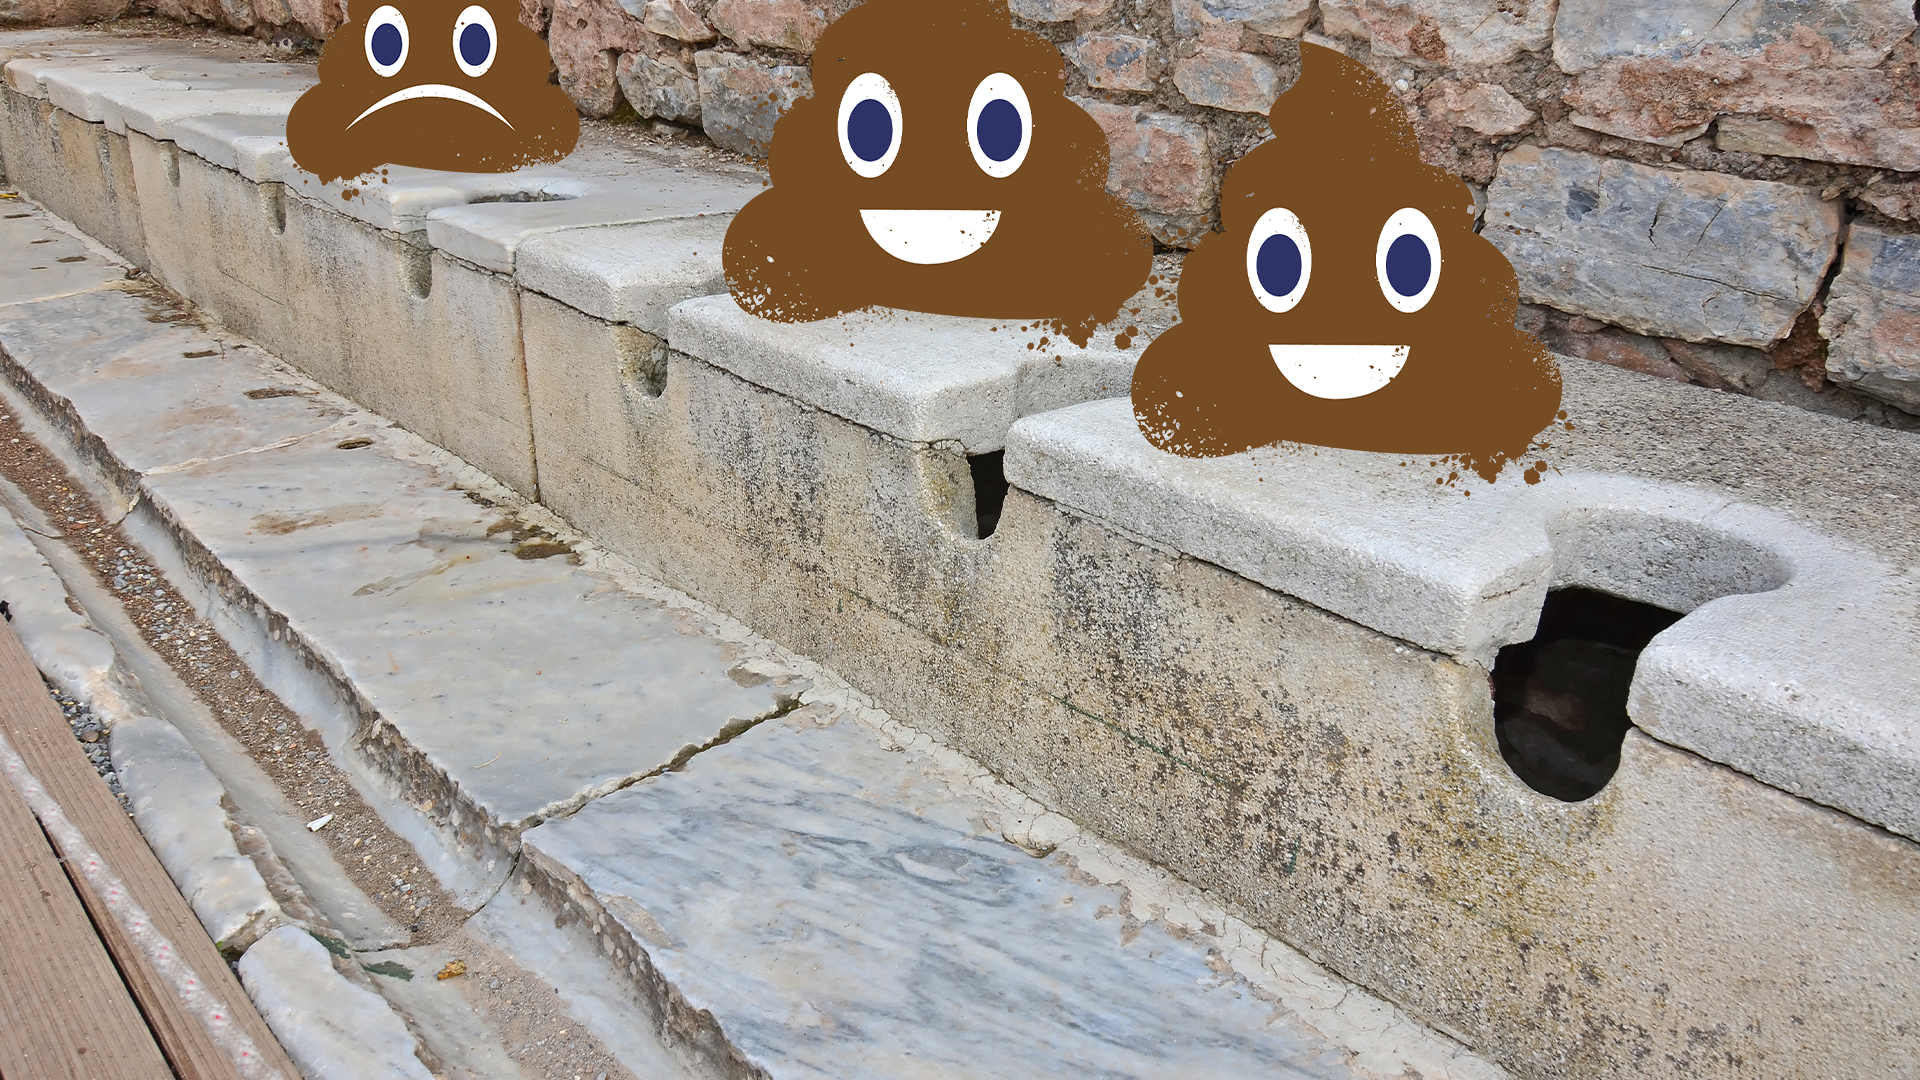 A Roman toilet with poop emojis